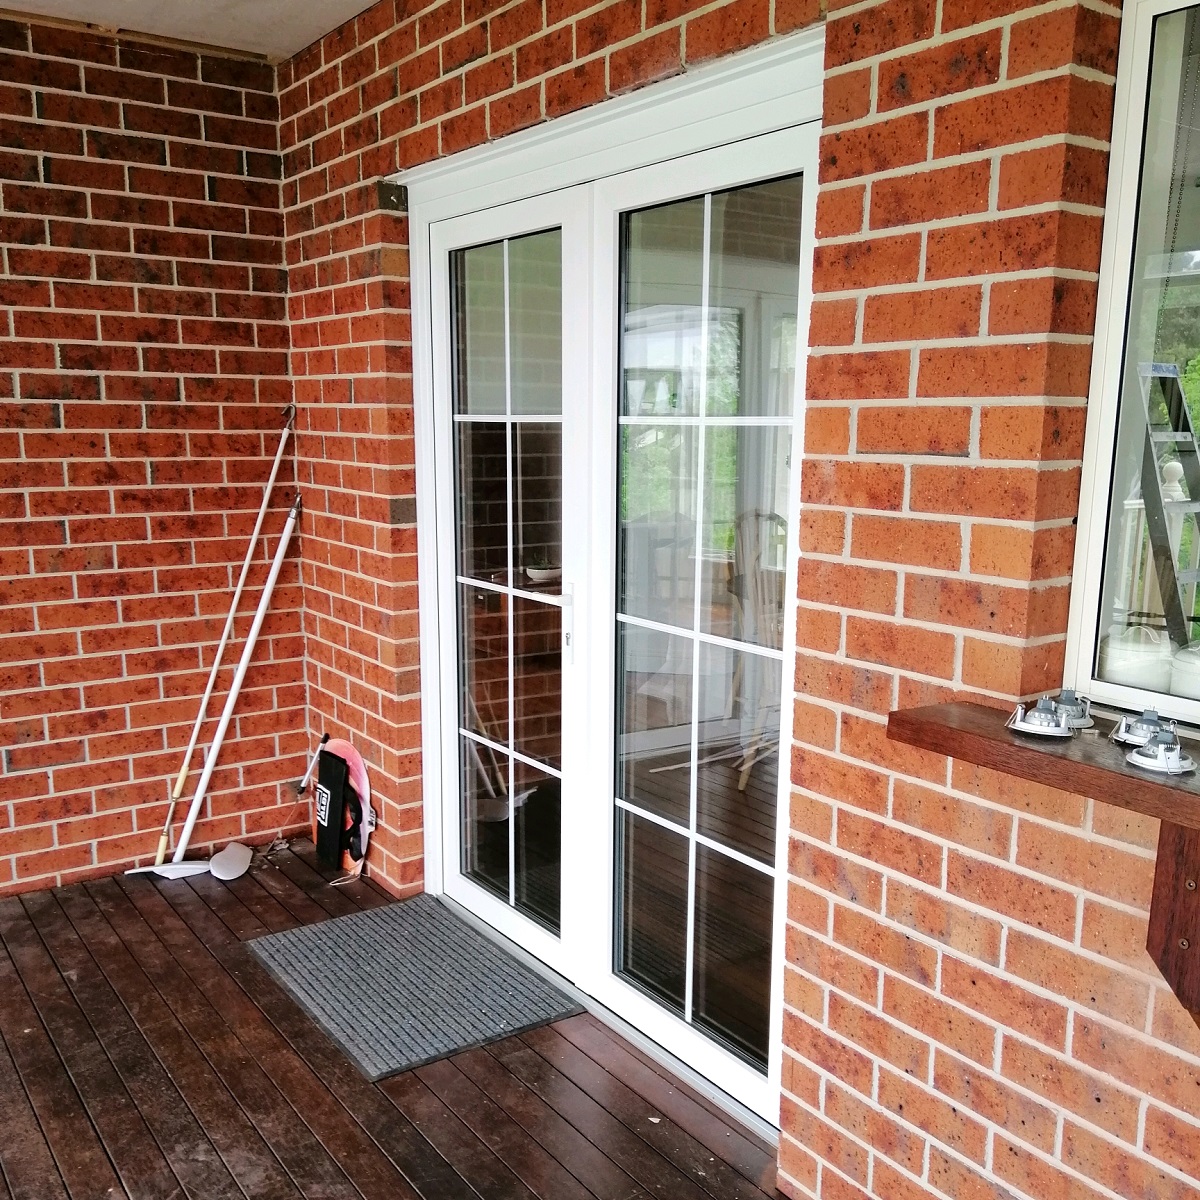 UPVC Double Glazing Berwick | APS Double Glazing Windows and Doors Melbourne | Another Satisfied Berwick, Victoria APS Customer | Phone 1300 294 101